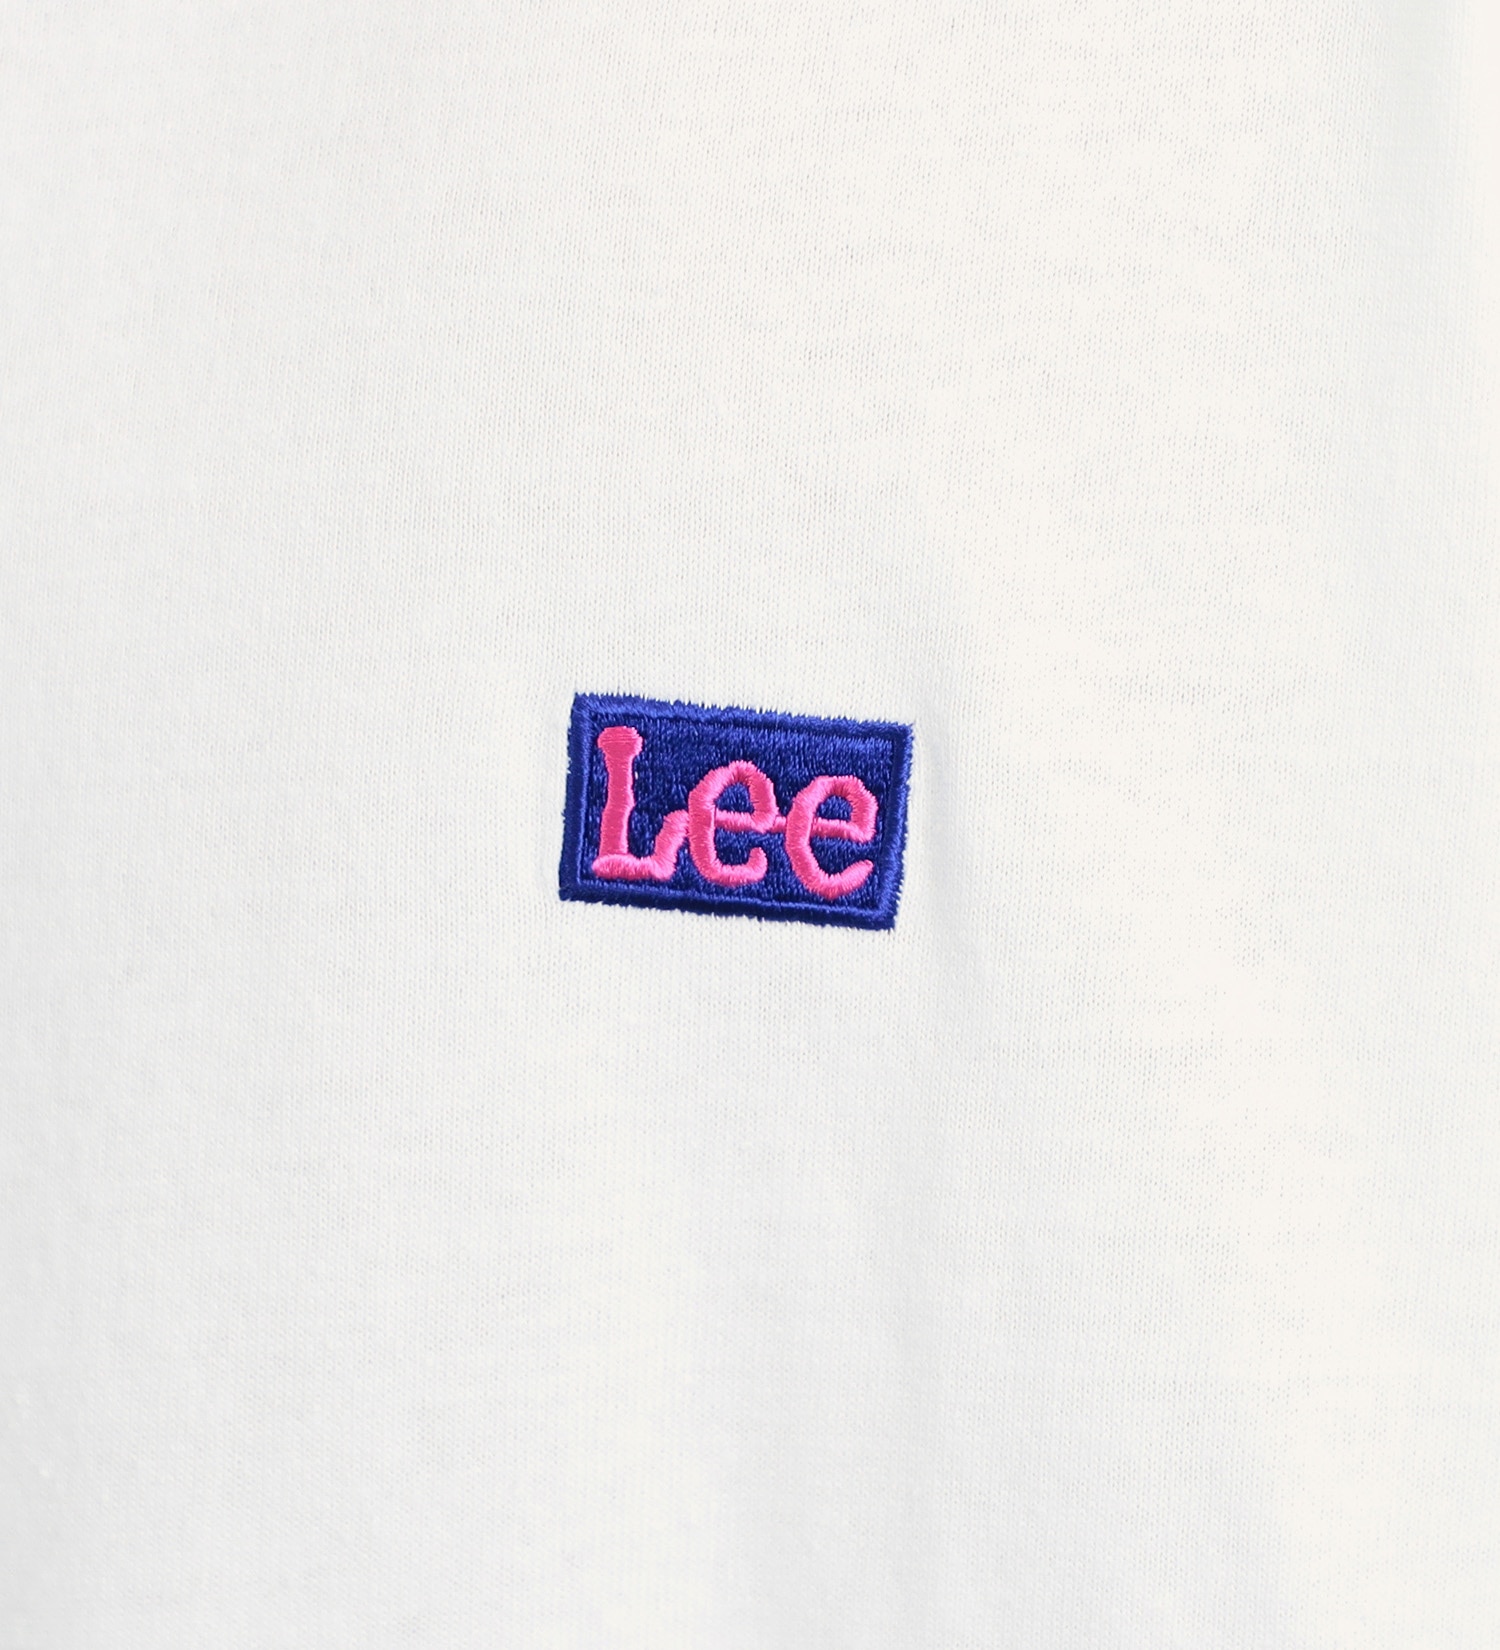 Lee(リー)のLee バックプリント ショートスリーブTee|トップス/Tシャツ/カットソー/メンズ|ホワイト2